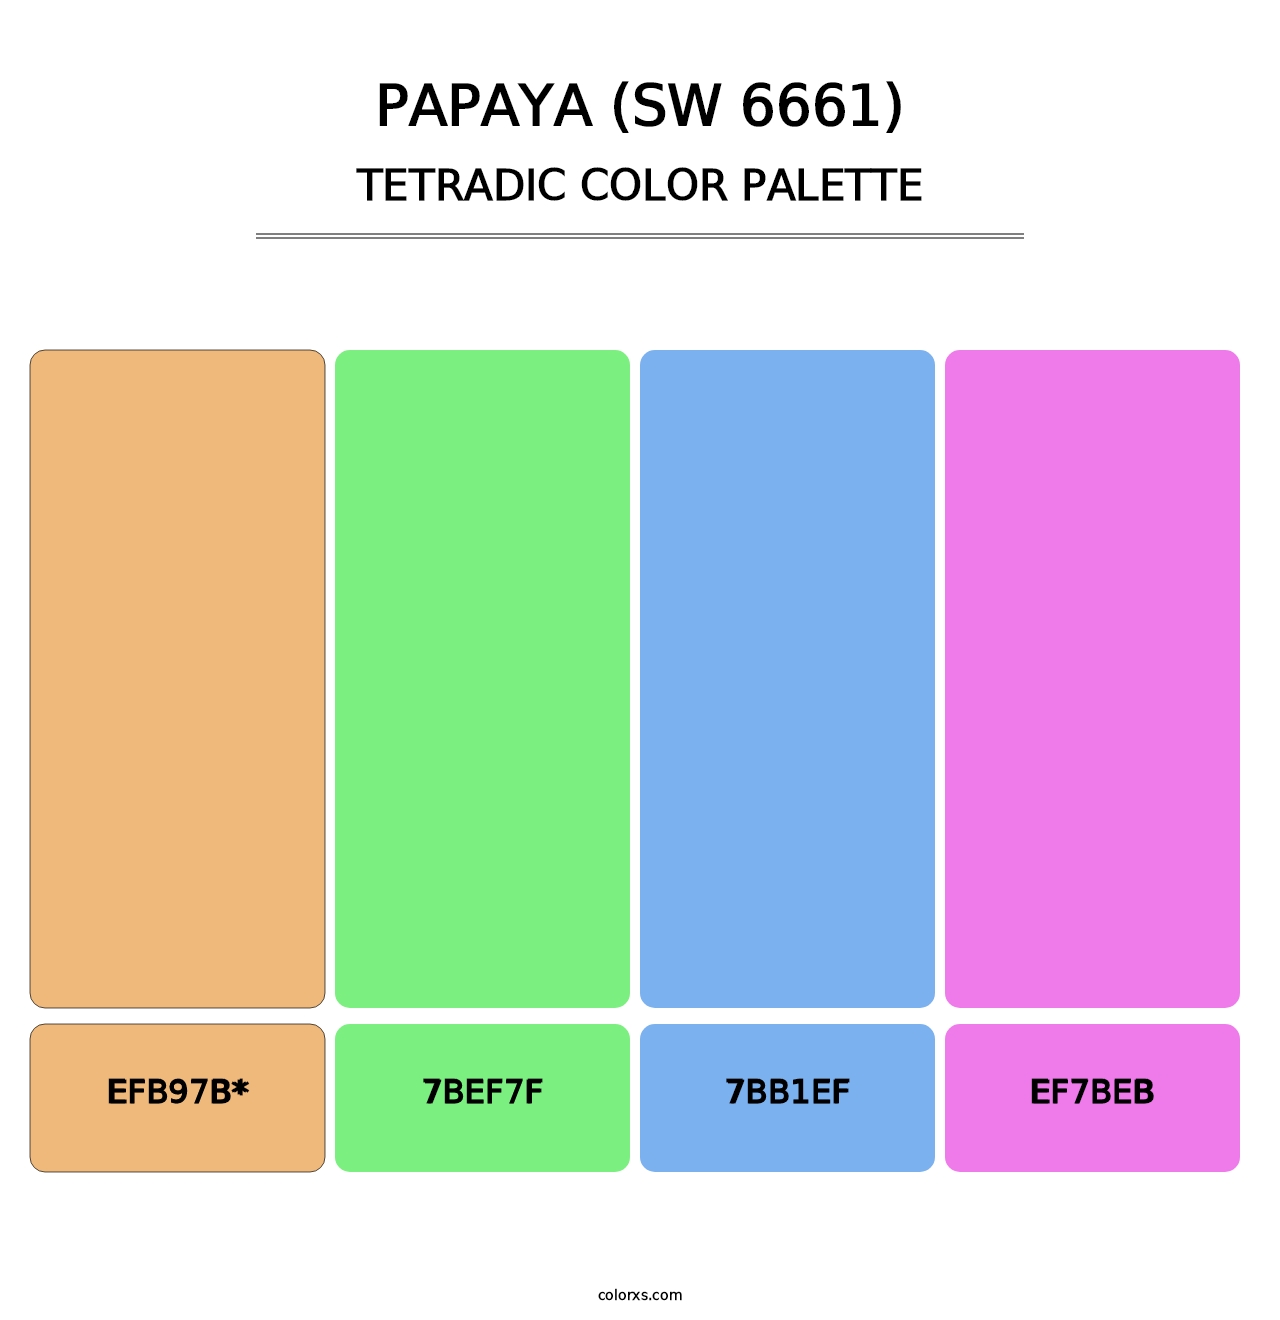 Papaya (SW 6661) - Tetradic Color Palette